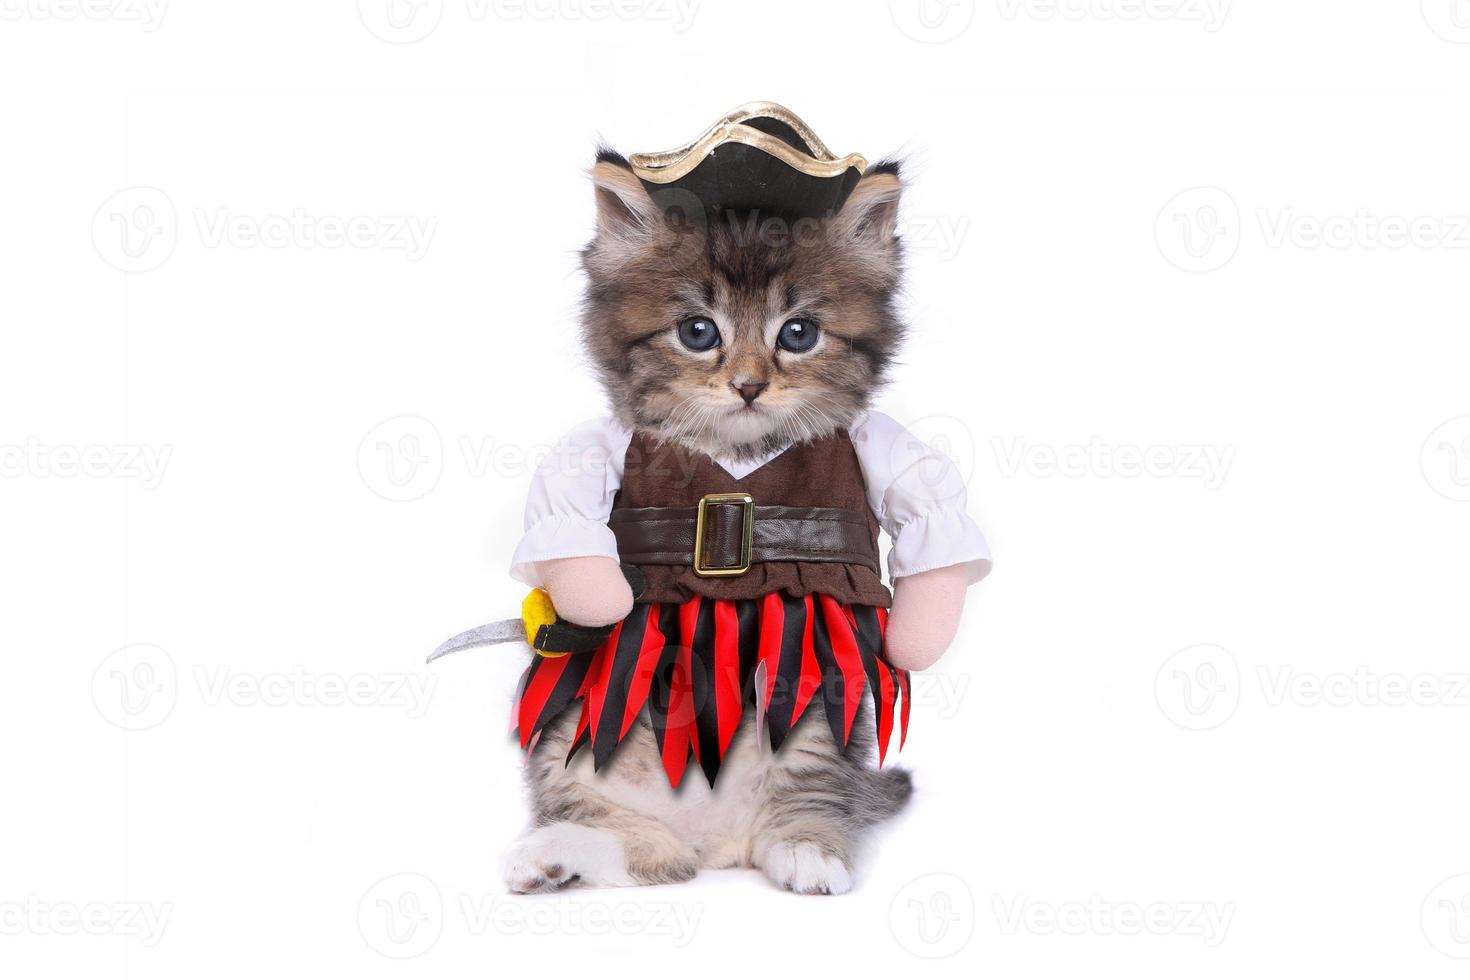 serieuze kitten in op piraten geïnspireerd kledingkostuum foto